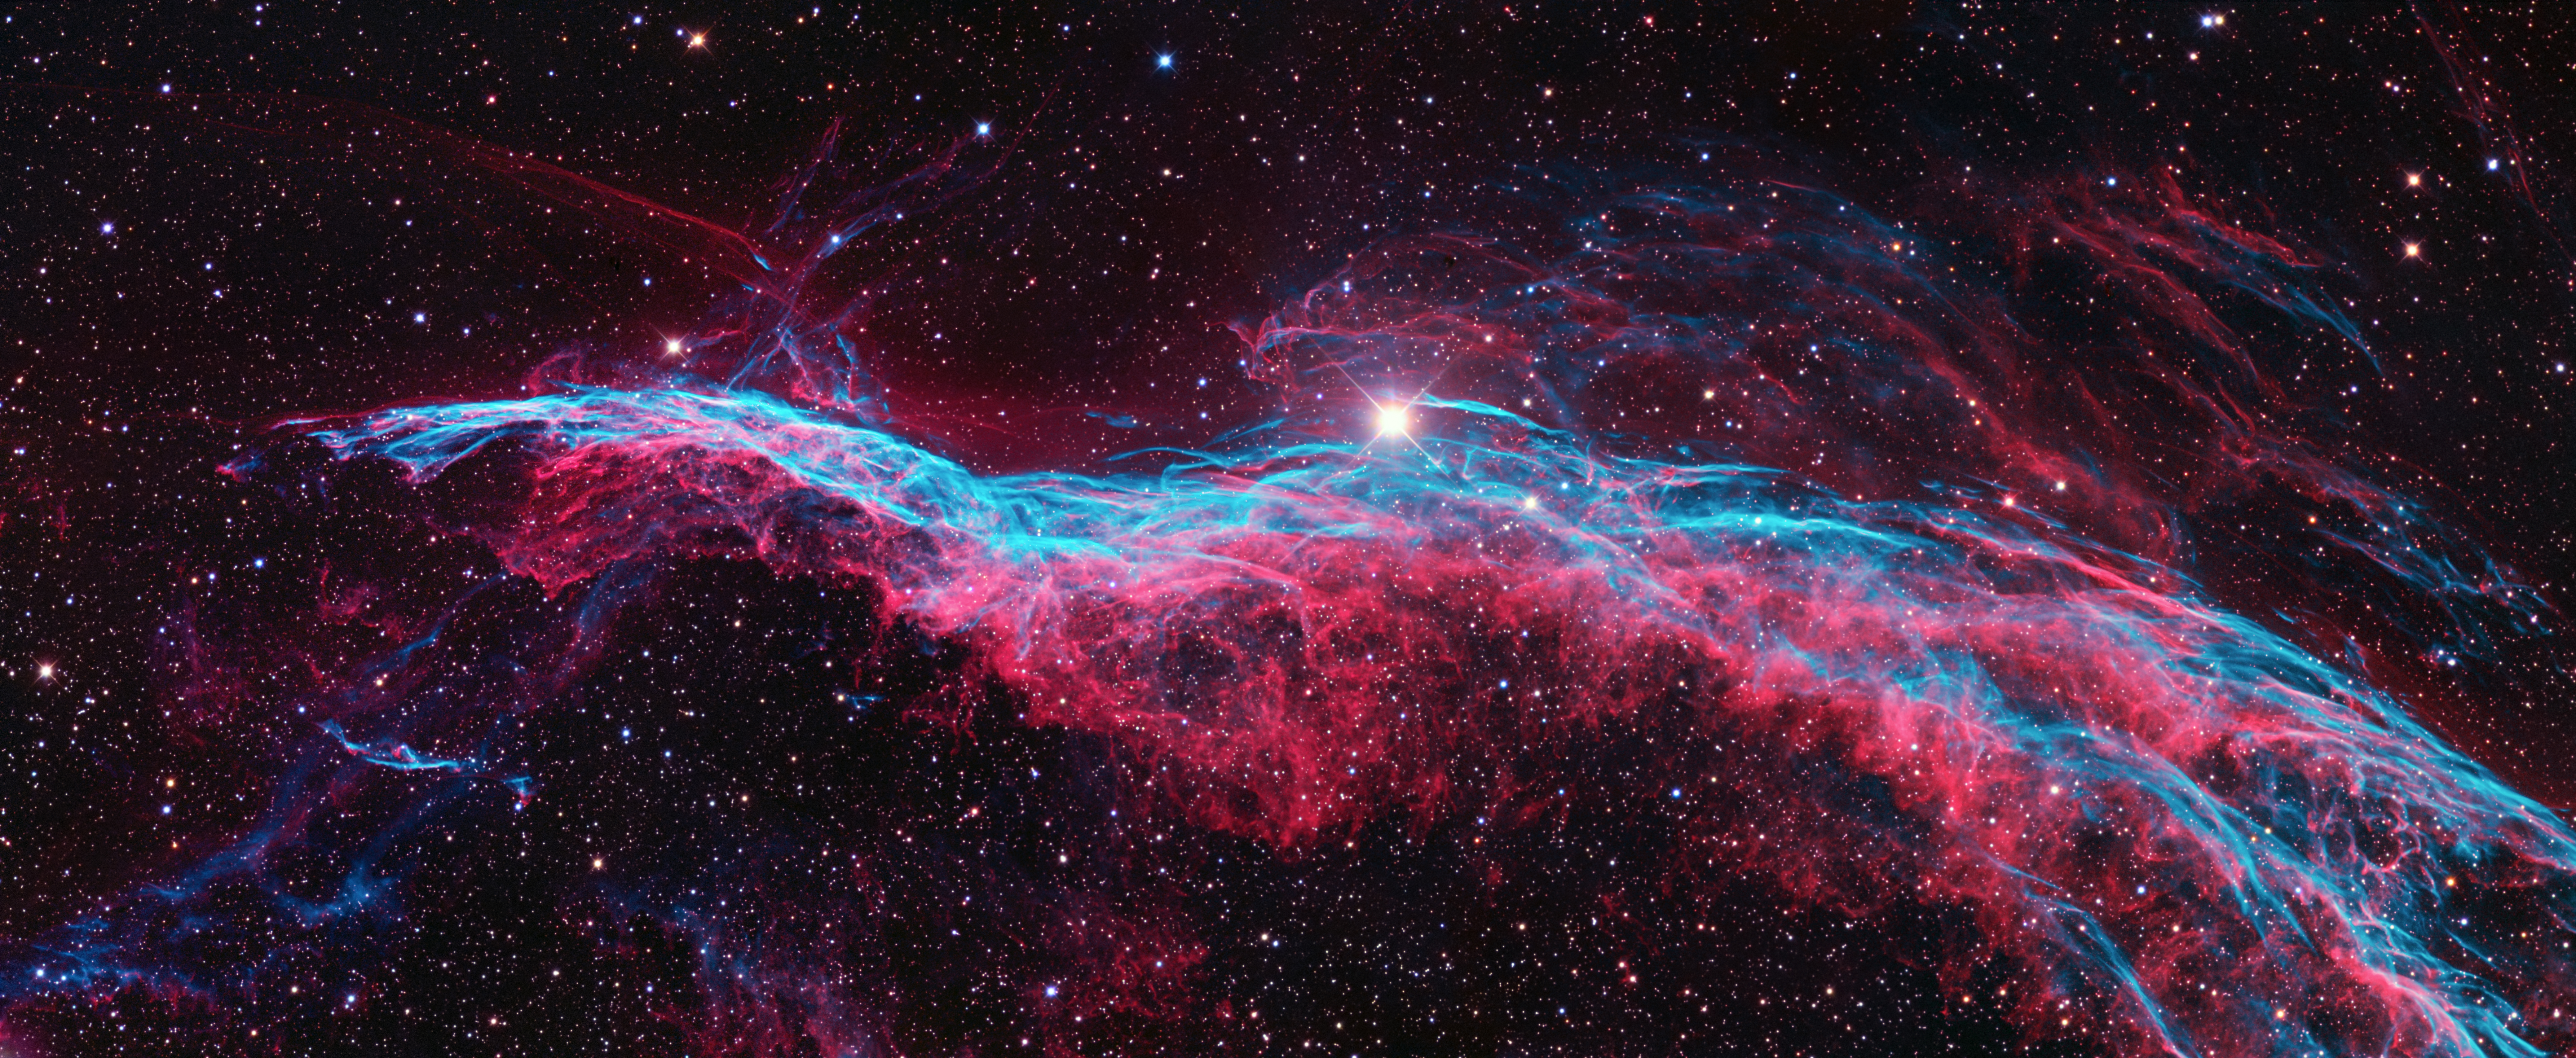 Veil Nebula - Wikipedia